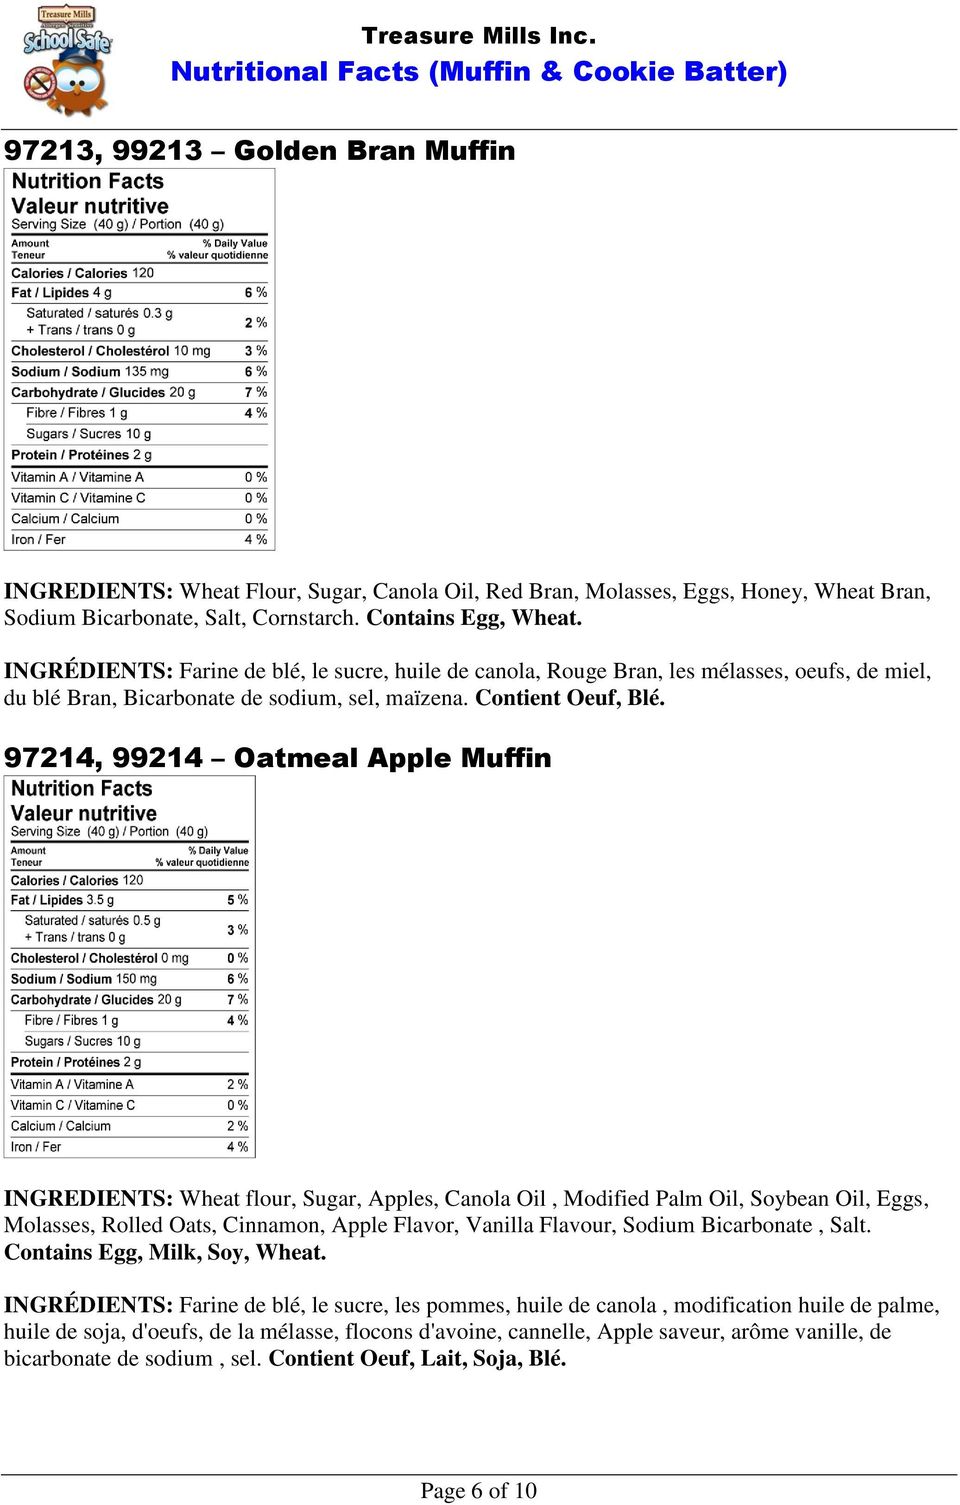 97214, 99214 Oatmeal Apple Muffin INGREDIENTS: Wheat flour, Sugar, Apples, Canola Oil, Modified Palm Oil, Soybean Oil, Eggs, Molasses, Rolled Oats, Cinnamon, Apple Flavor, Vanilla Flavour, Sodium